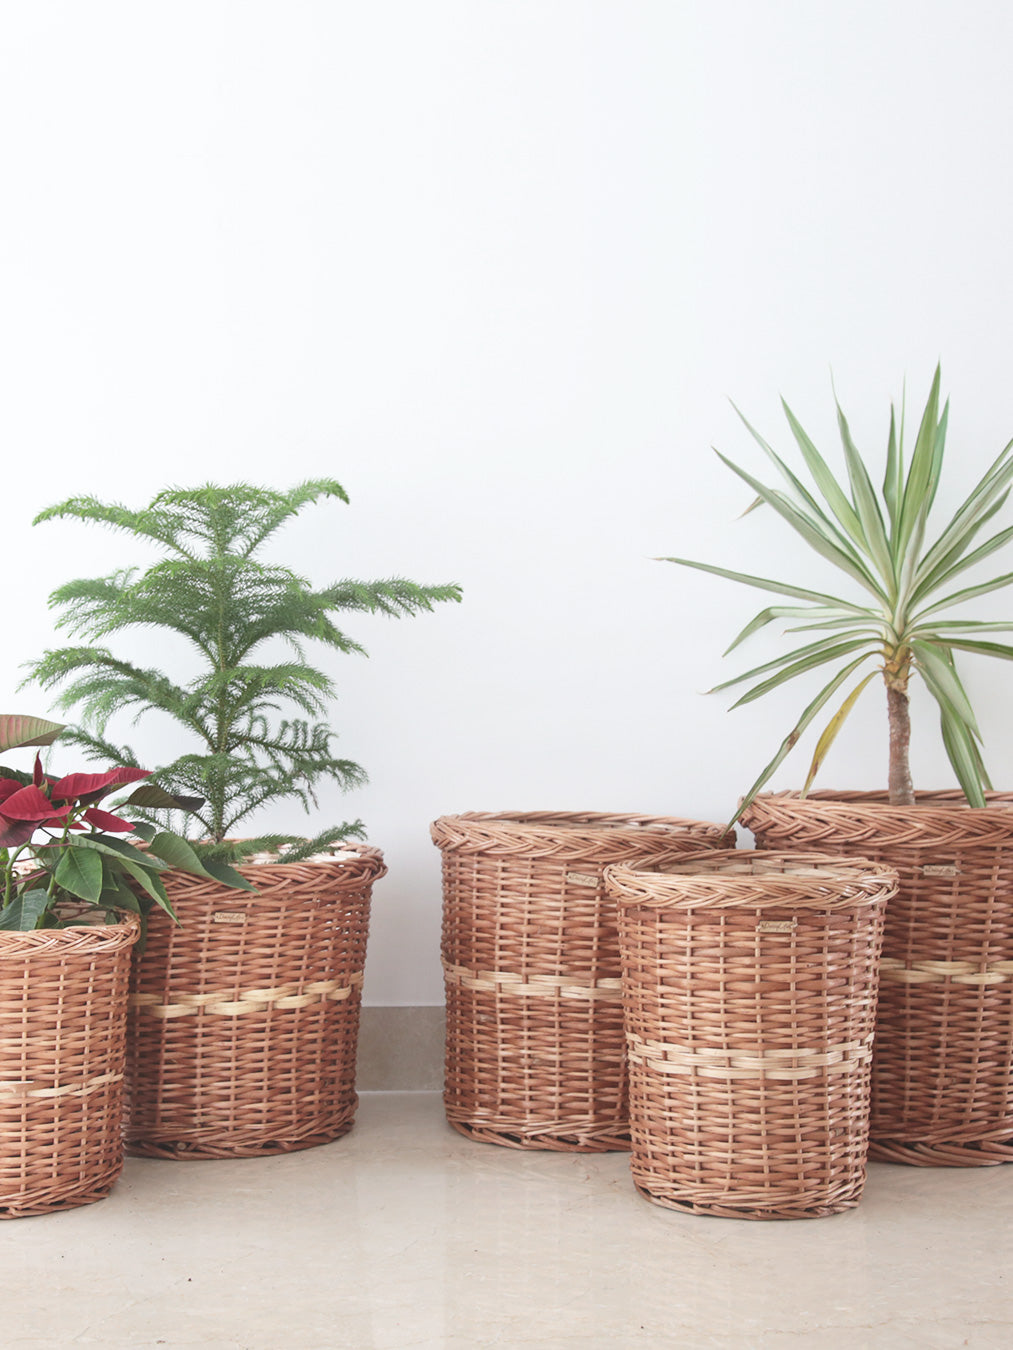 DaisyLife Natural Willow Wicker planter basket, Flower Basket, Gift Basket, Storage and home decor basket